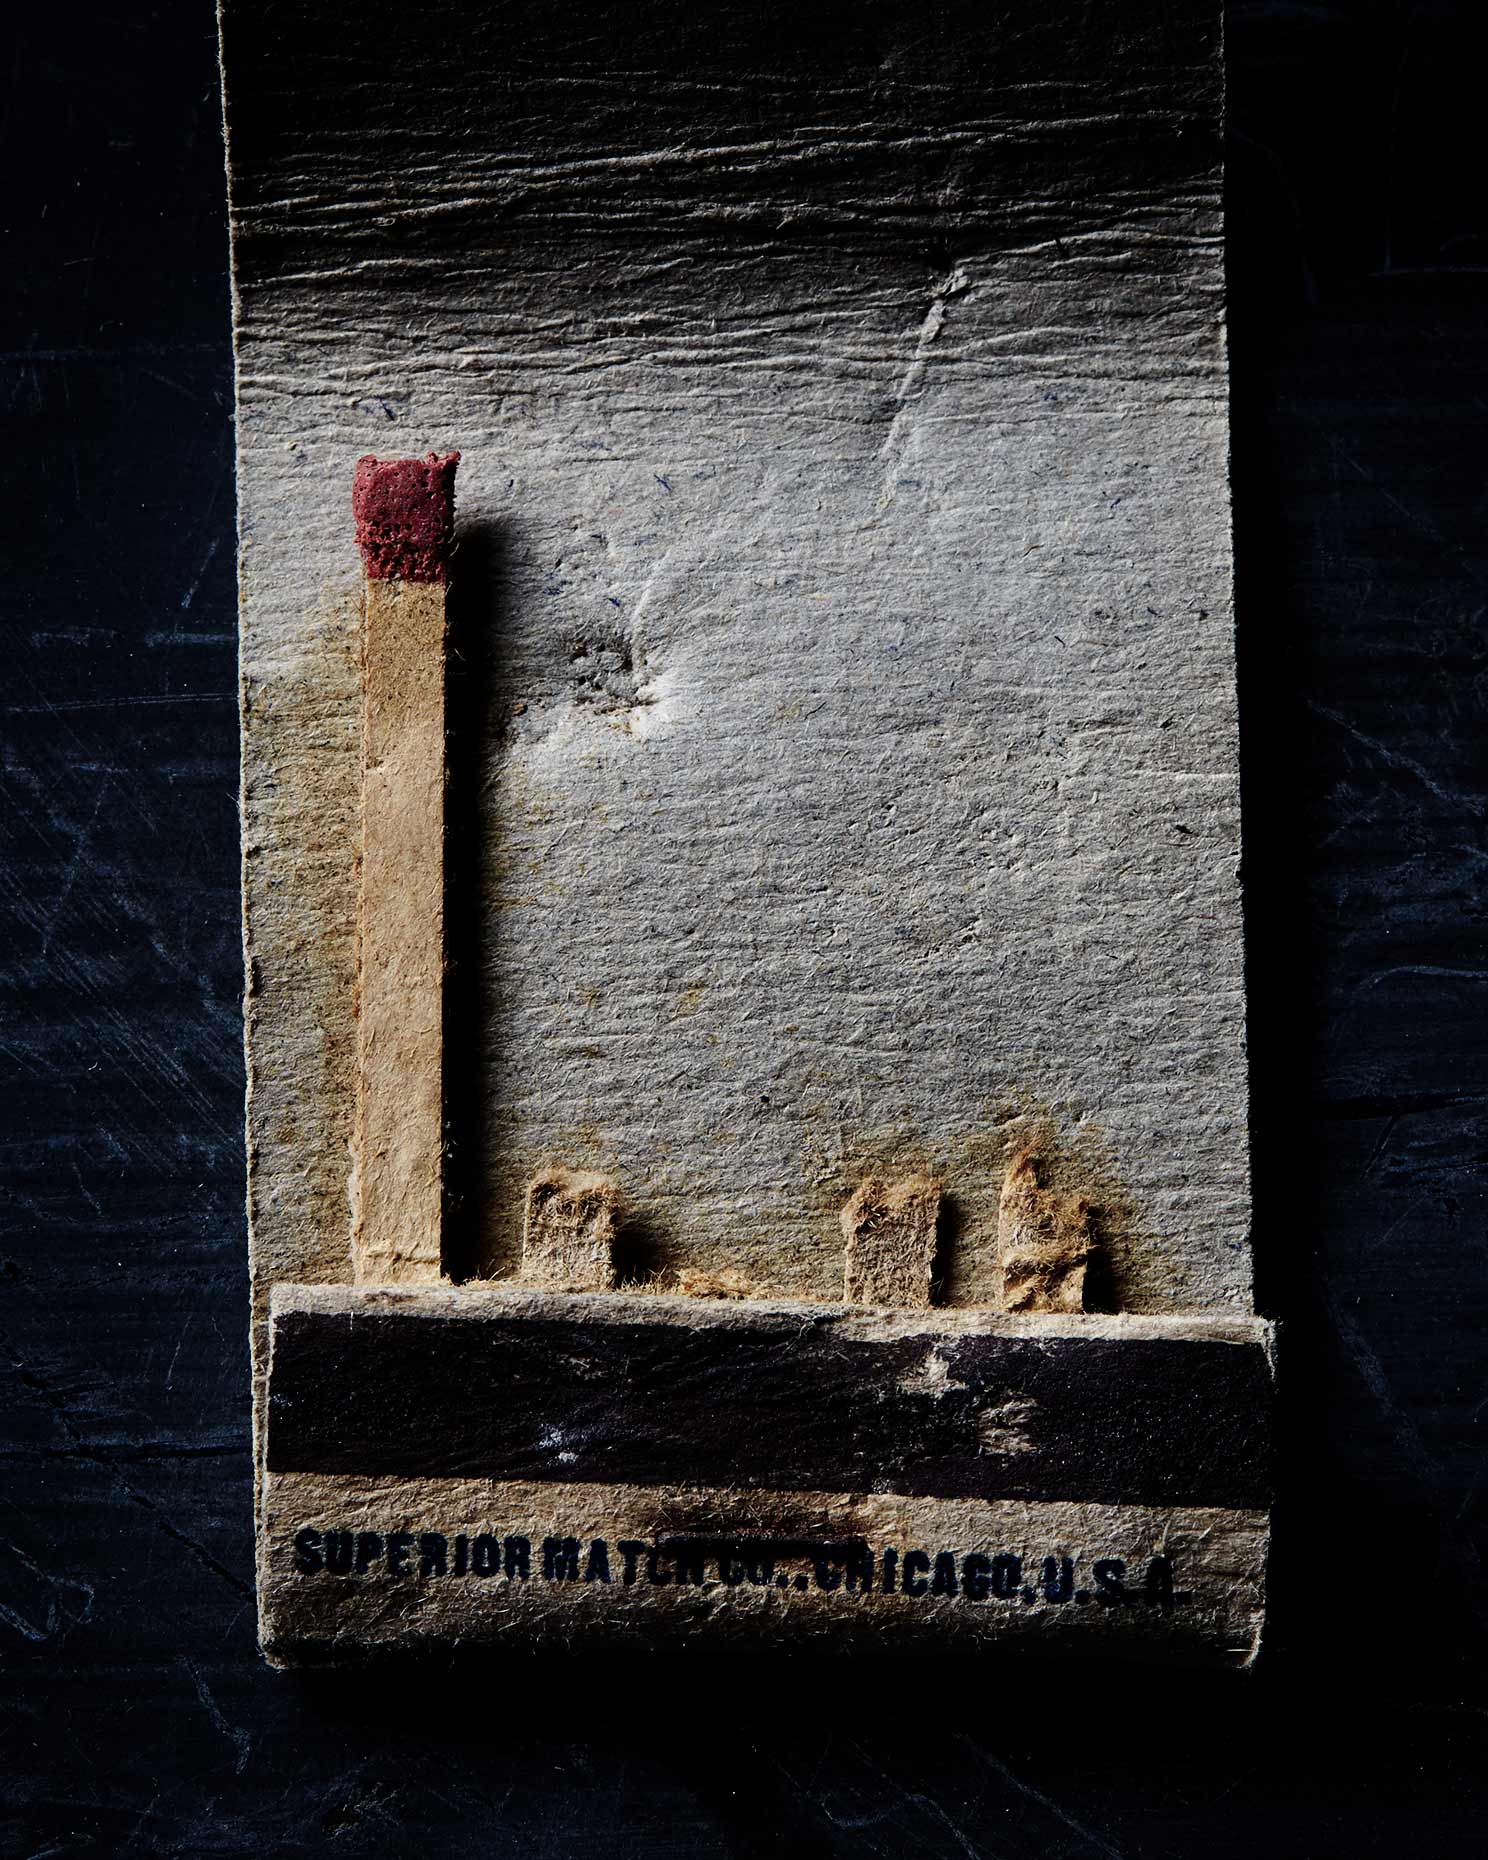 One matchstick left in an old vintage matchbook